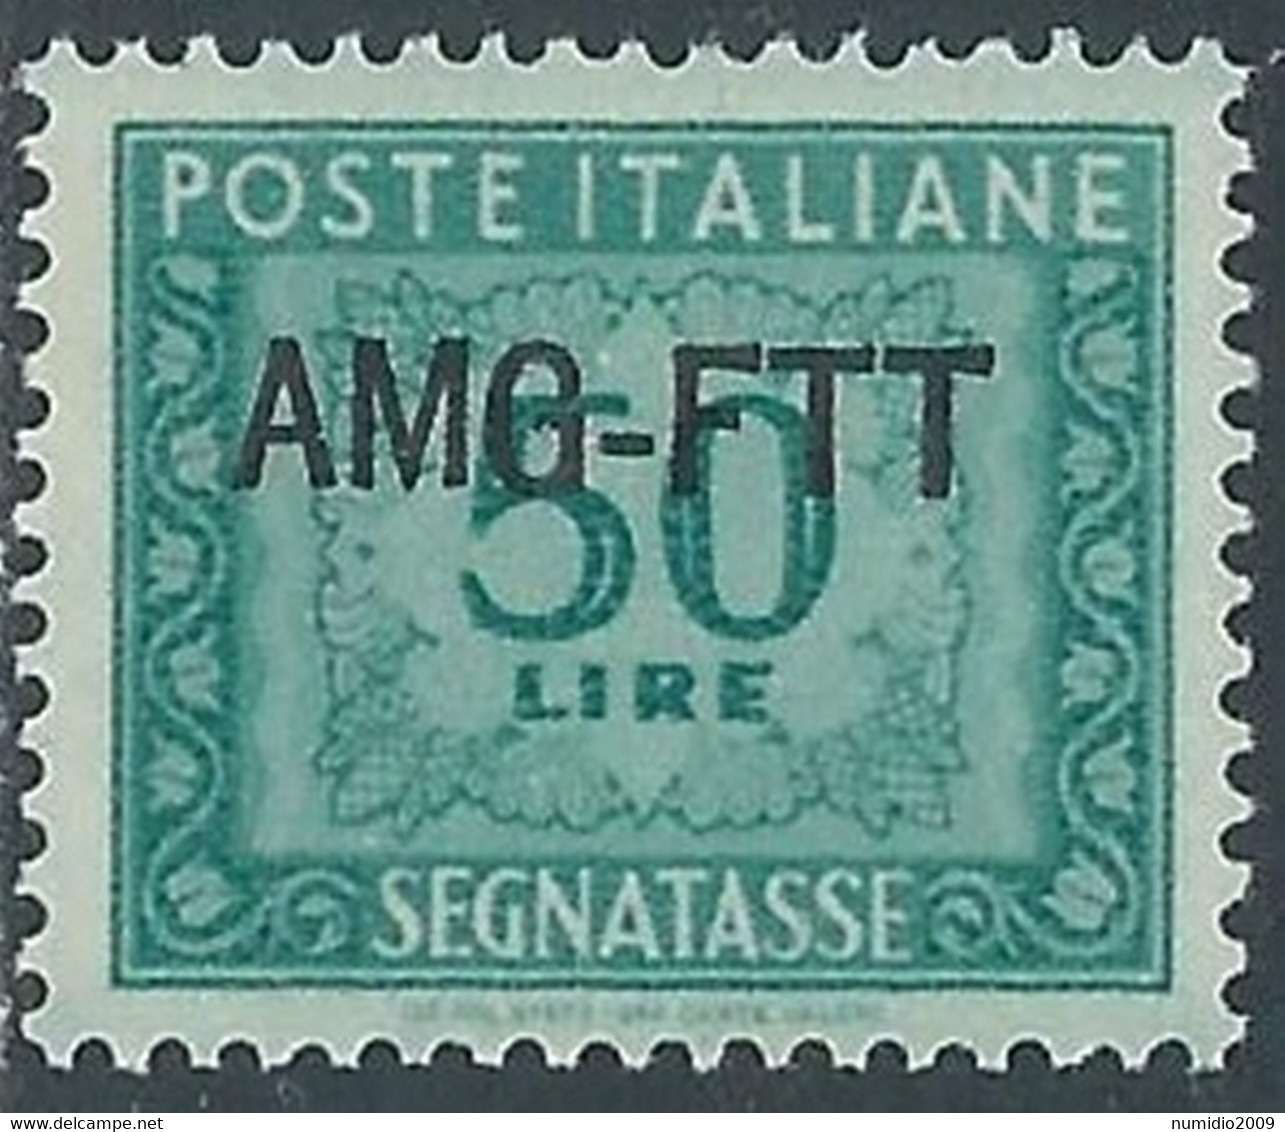 1949-54 TRIESTE A SEGNATASSE 50 LIRE MNH ** - P17-8 - Postage Due